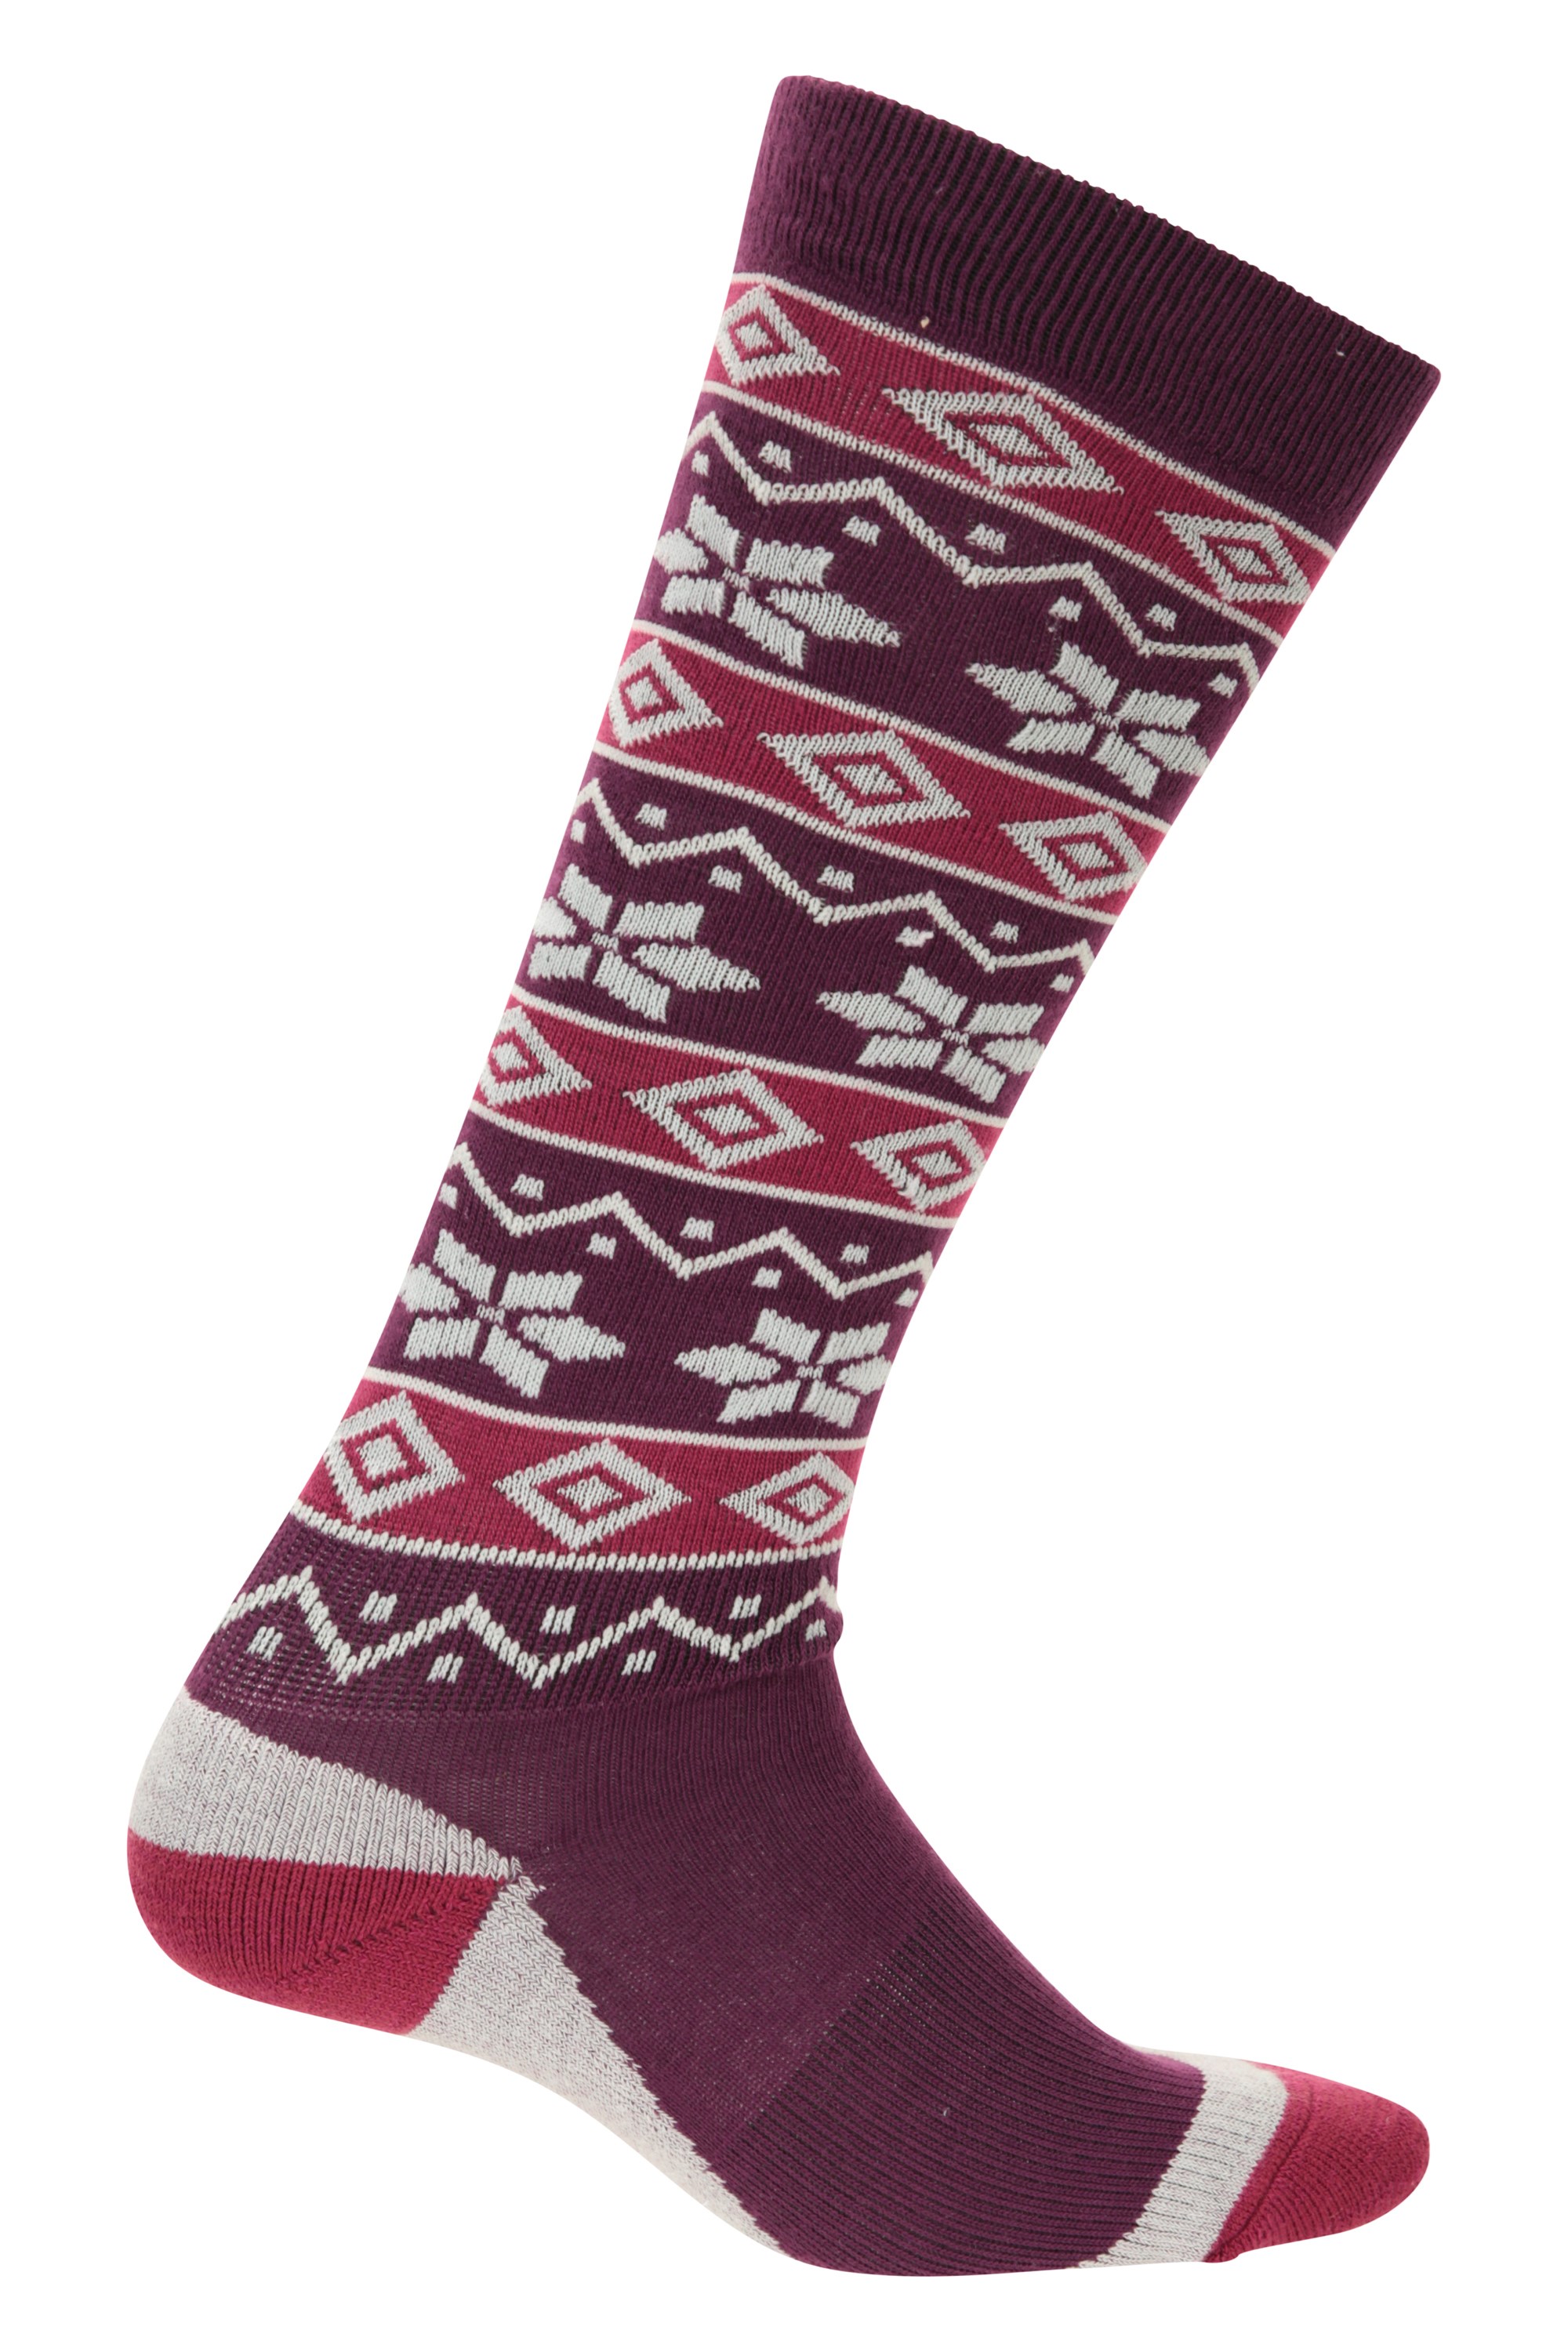 4-7 Mountain Warehouse Wms  Polar Patterned Womens Technical Ski Sock In Grey 